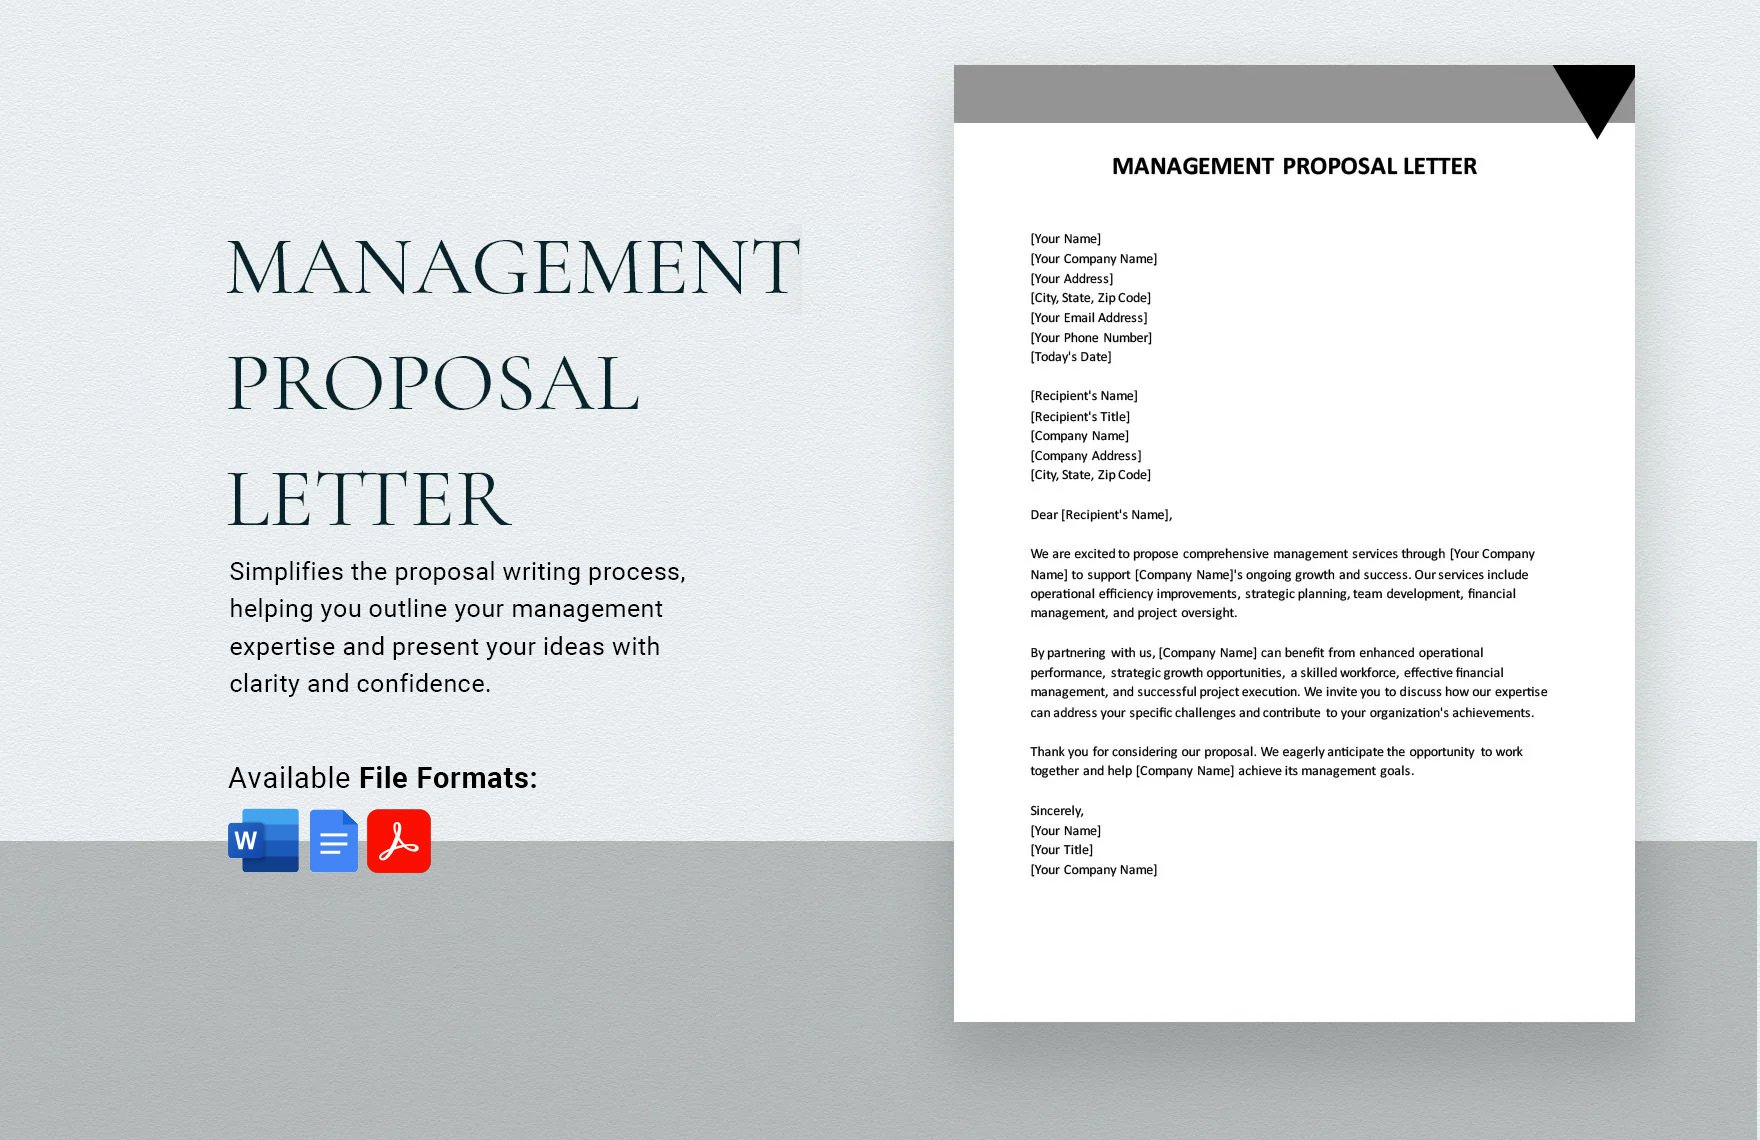 Management Proposal Letter in Word, Google Docs, PDF